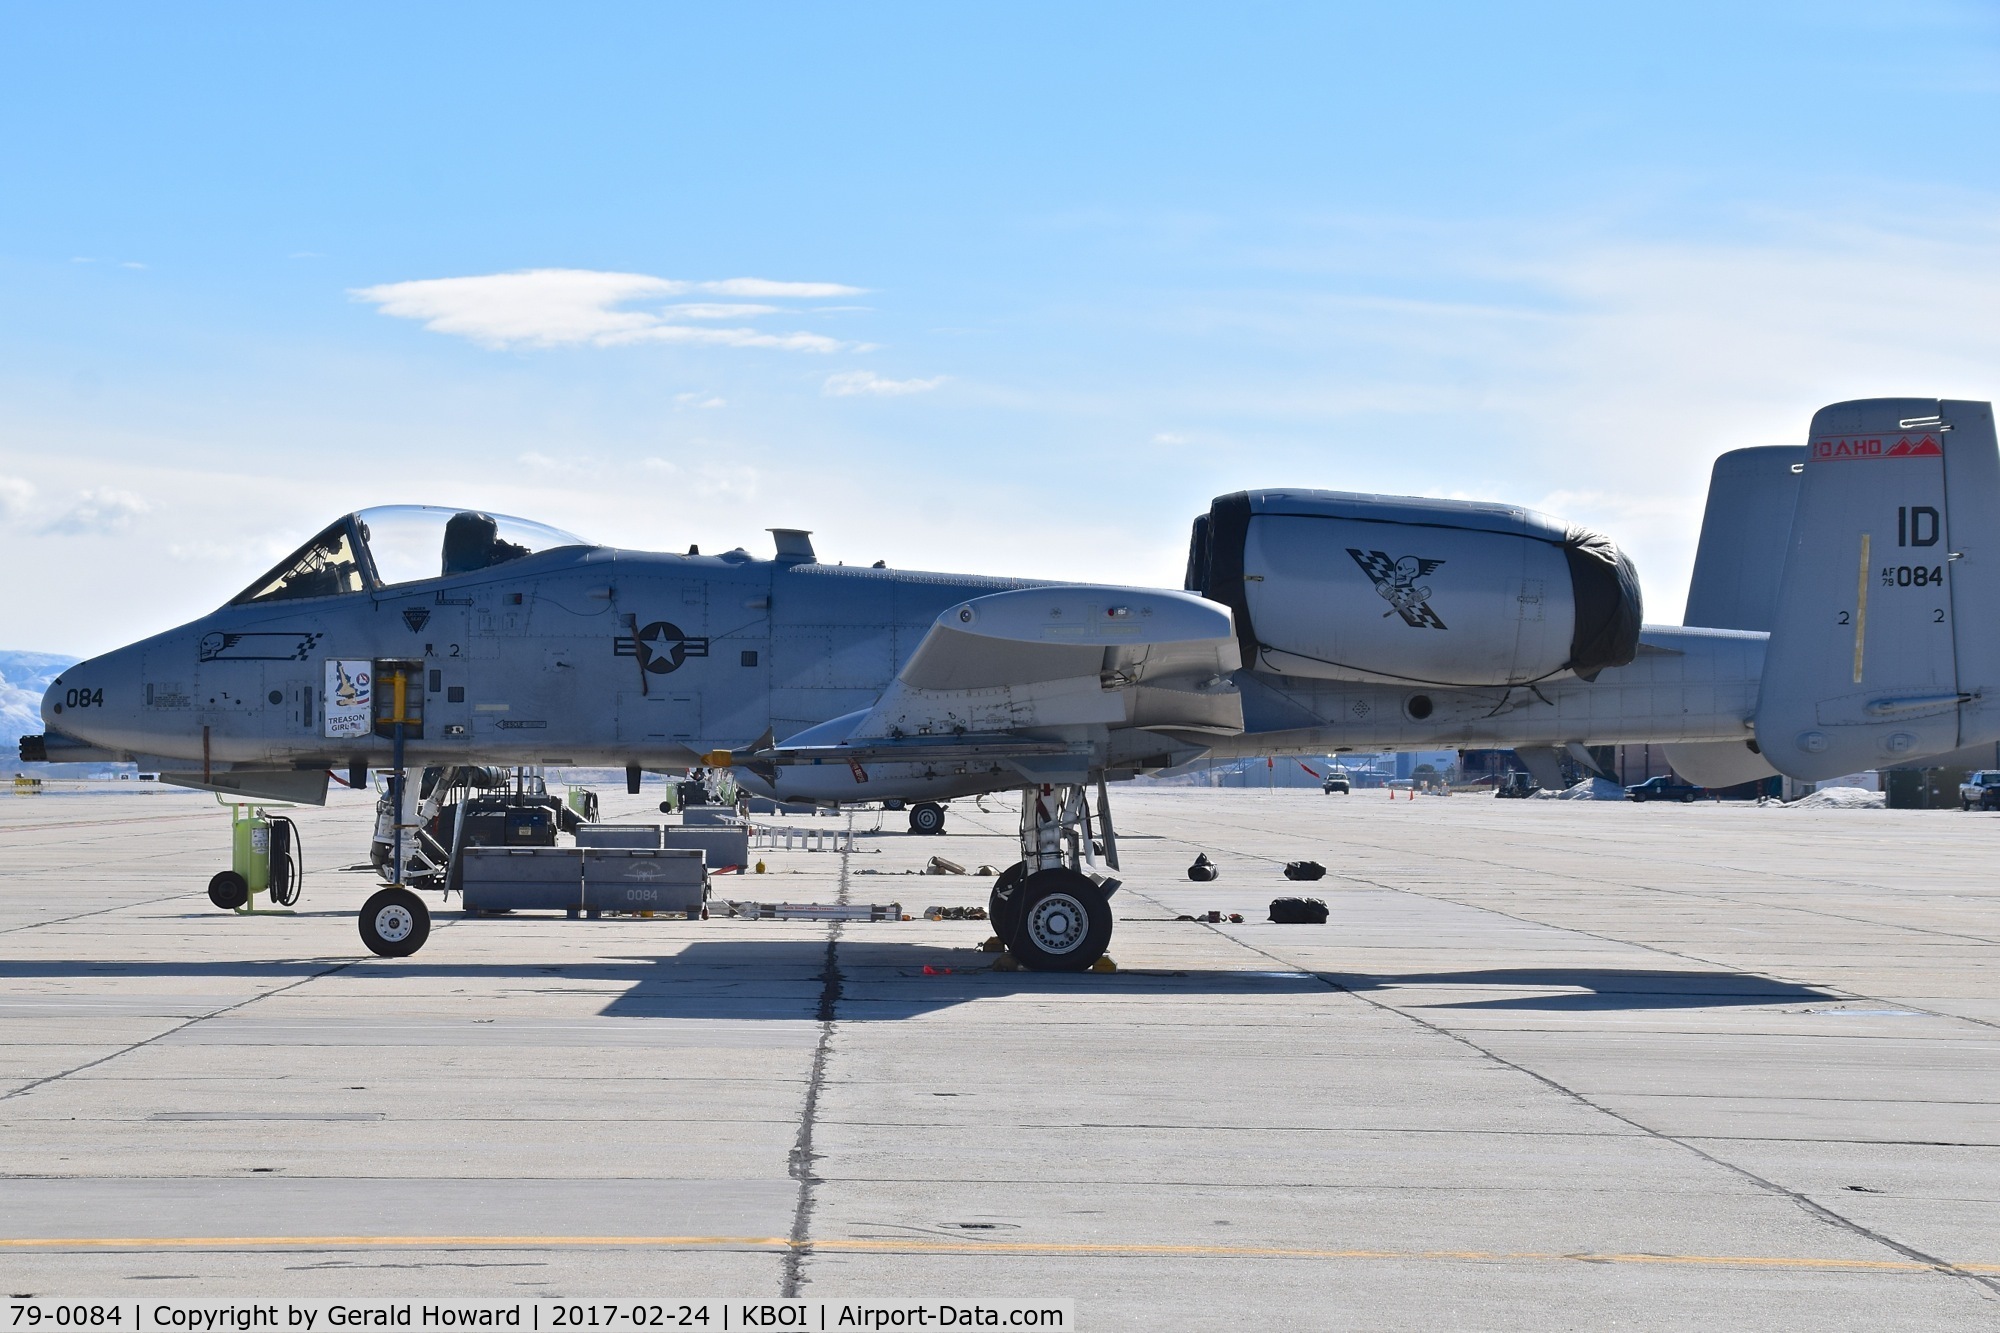 79-0084, 1979 Fairchild Republic A-10C Thunderbolt II C/N A10-0348, Parked on the Idaho ANG ramp. 190th Fighter Sq., Idaho ANG.